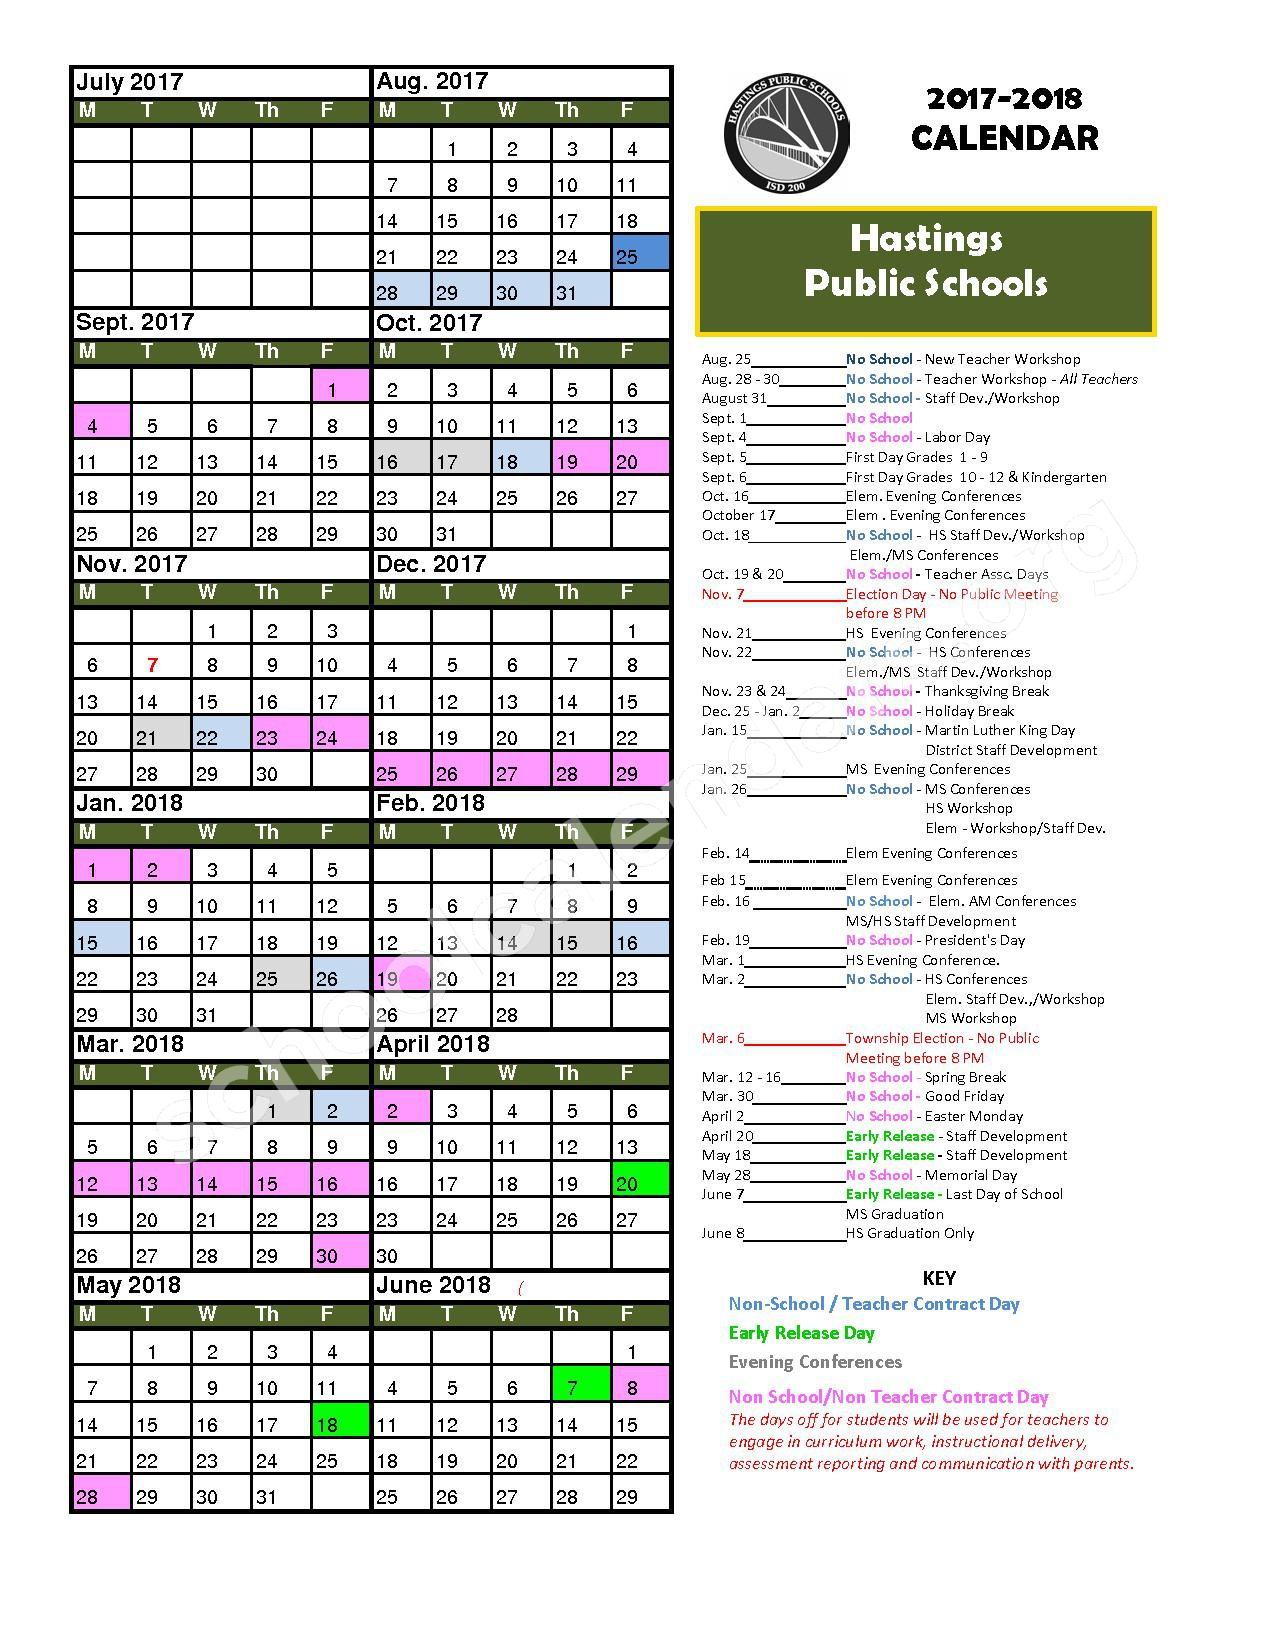 Hastings Public Schools Calendar 2023 Schoolcalendars net